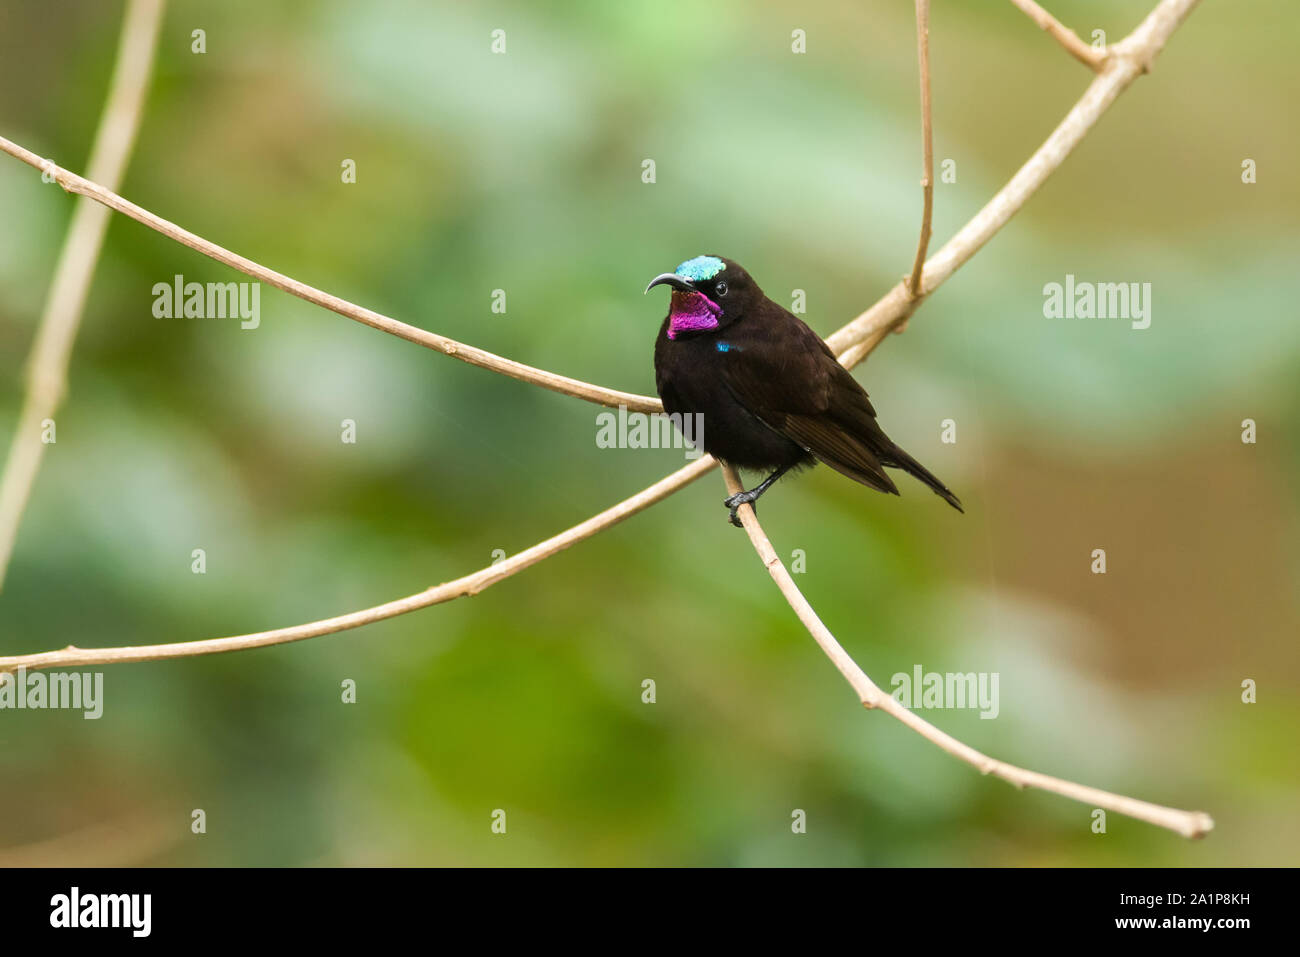 Male Amethyst or Black Sunbird (Chalcomitra amethystina) perched on branch, Kenya Stock Photo